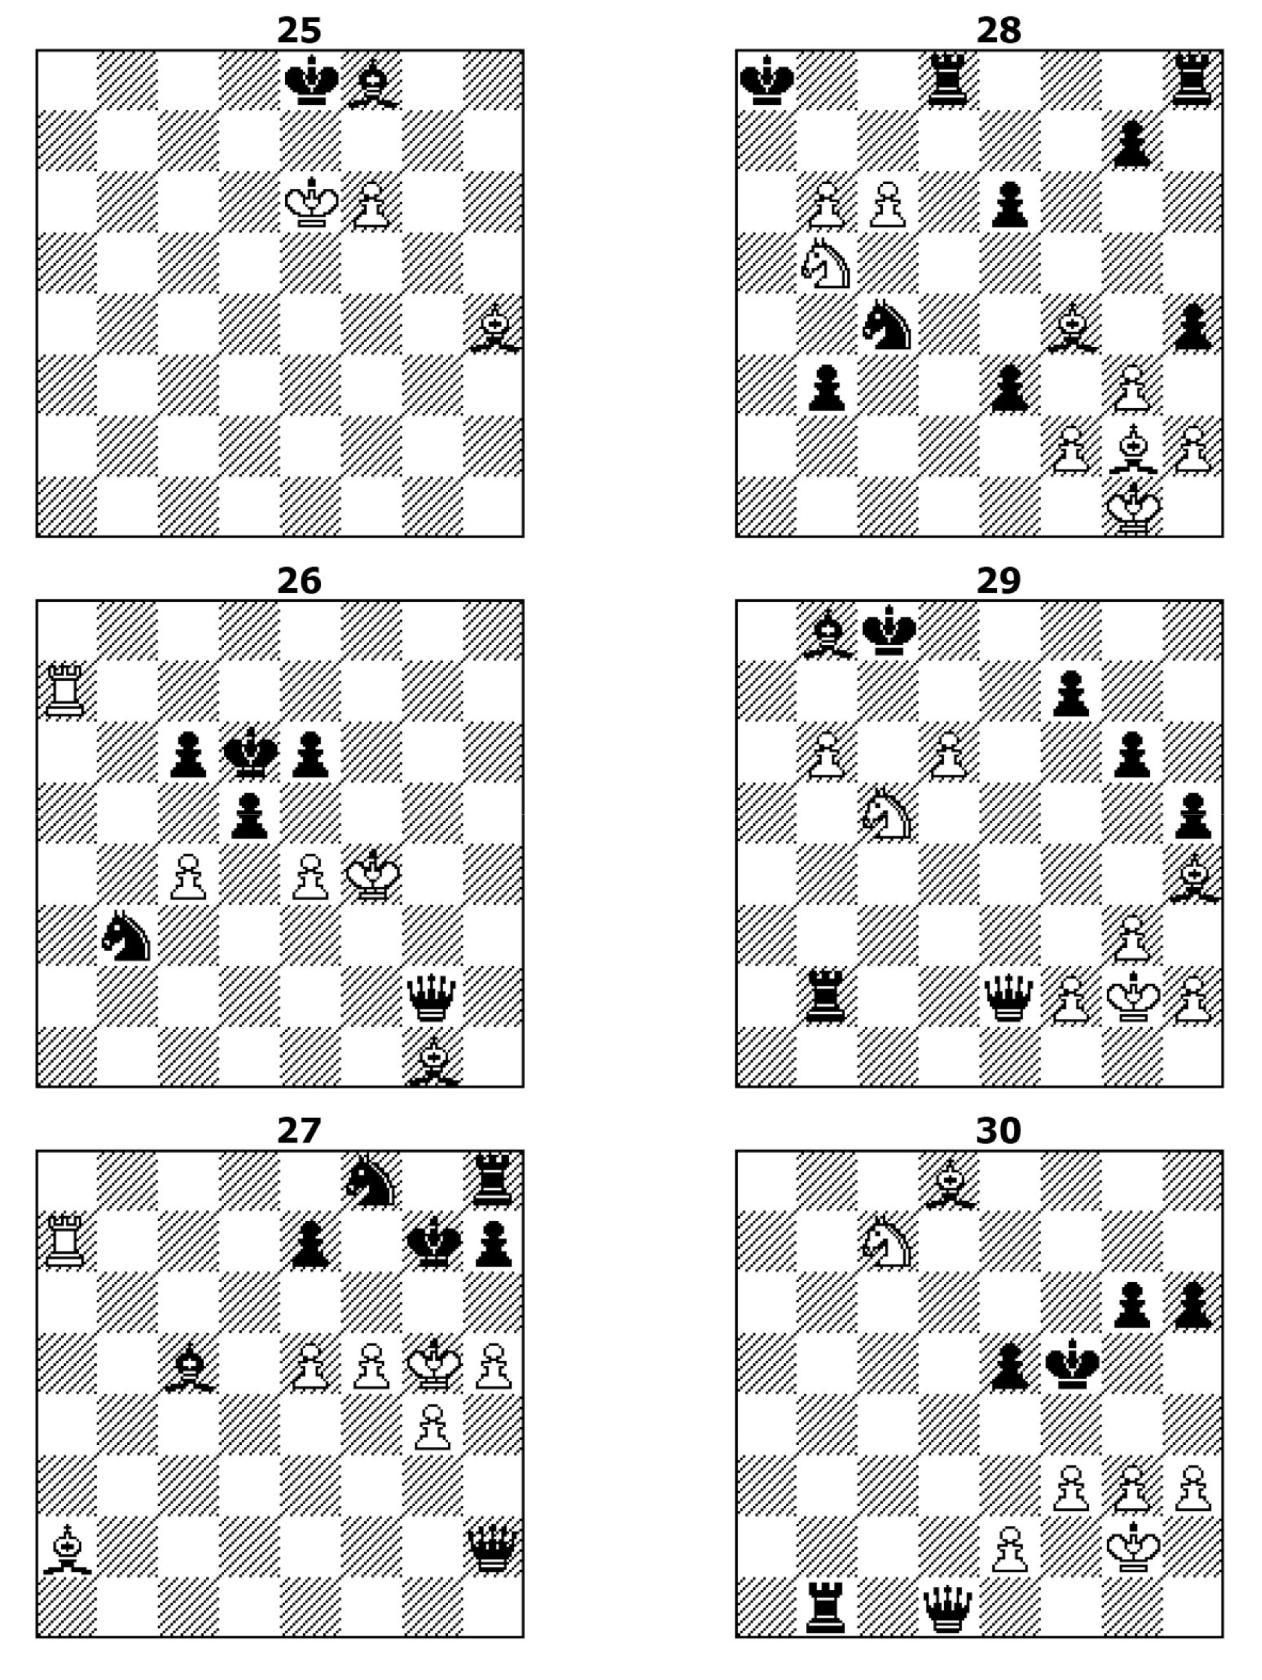 Шахматная комбинация двойной удар